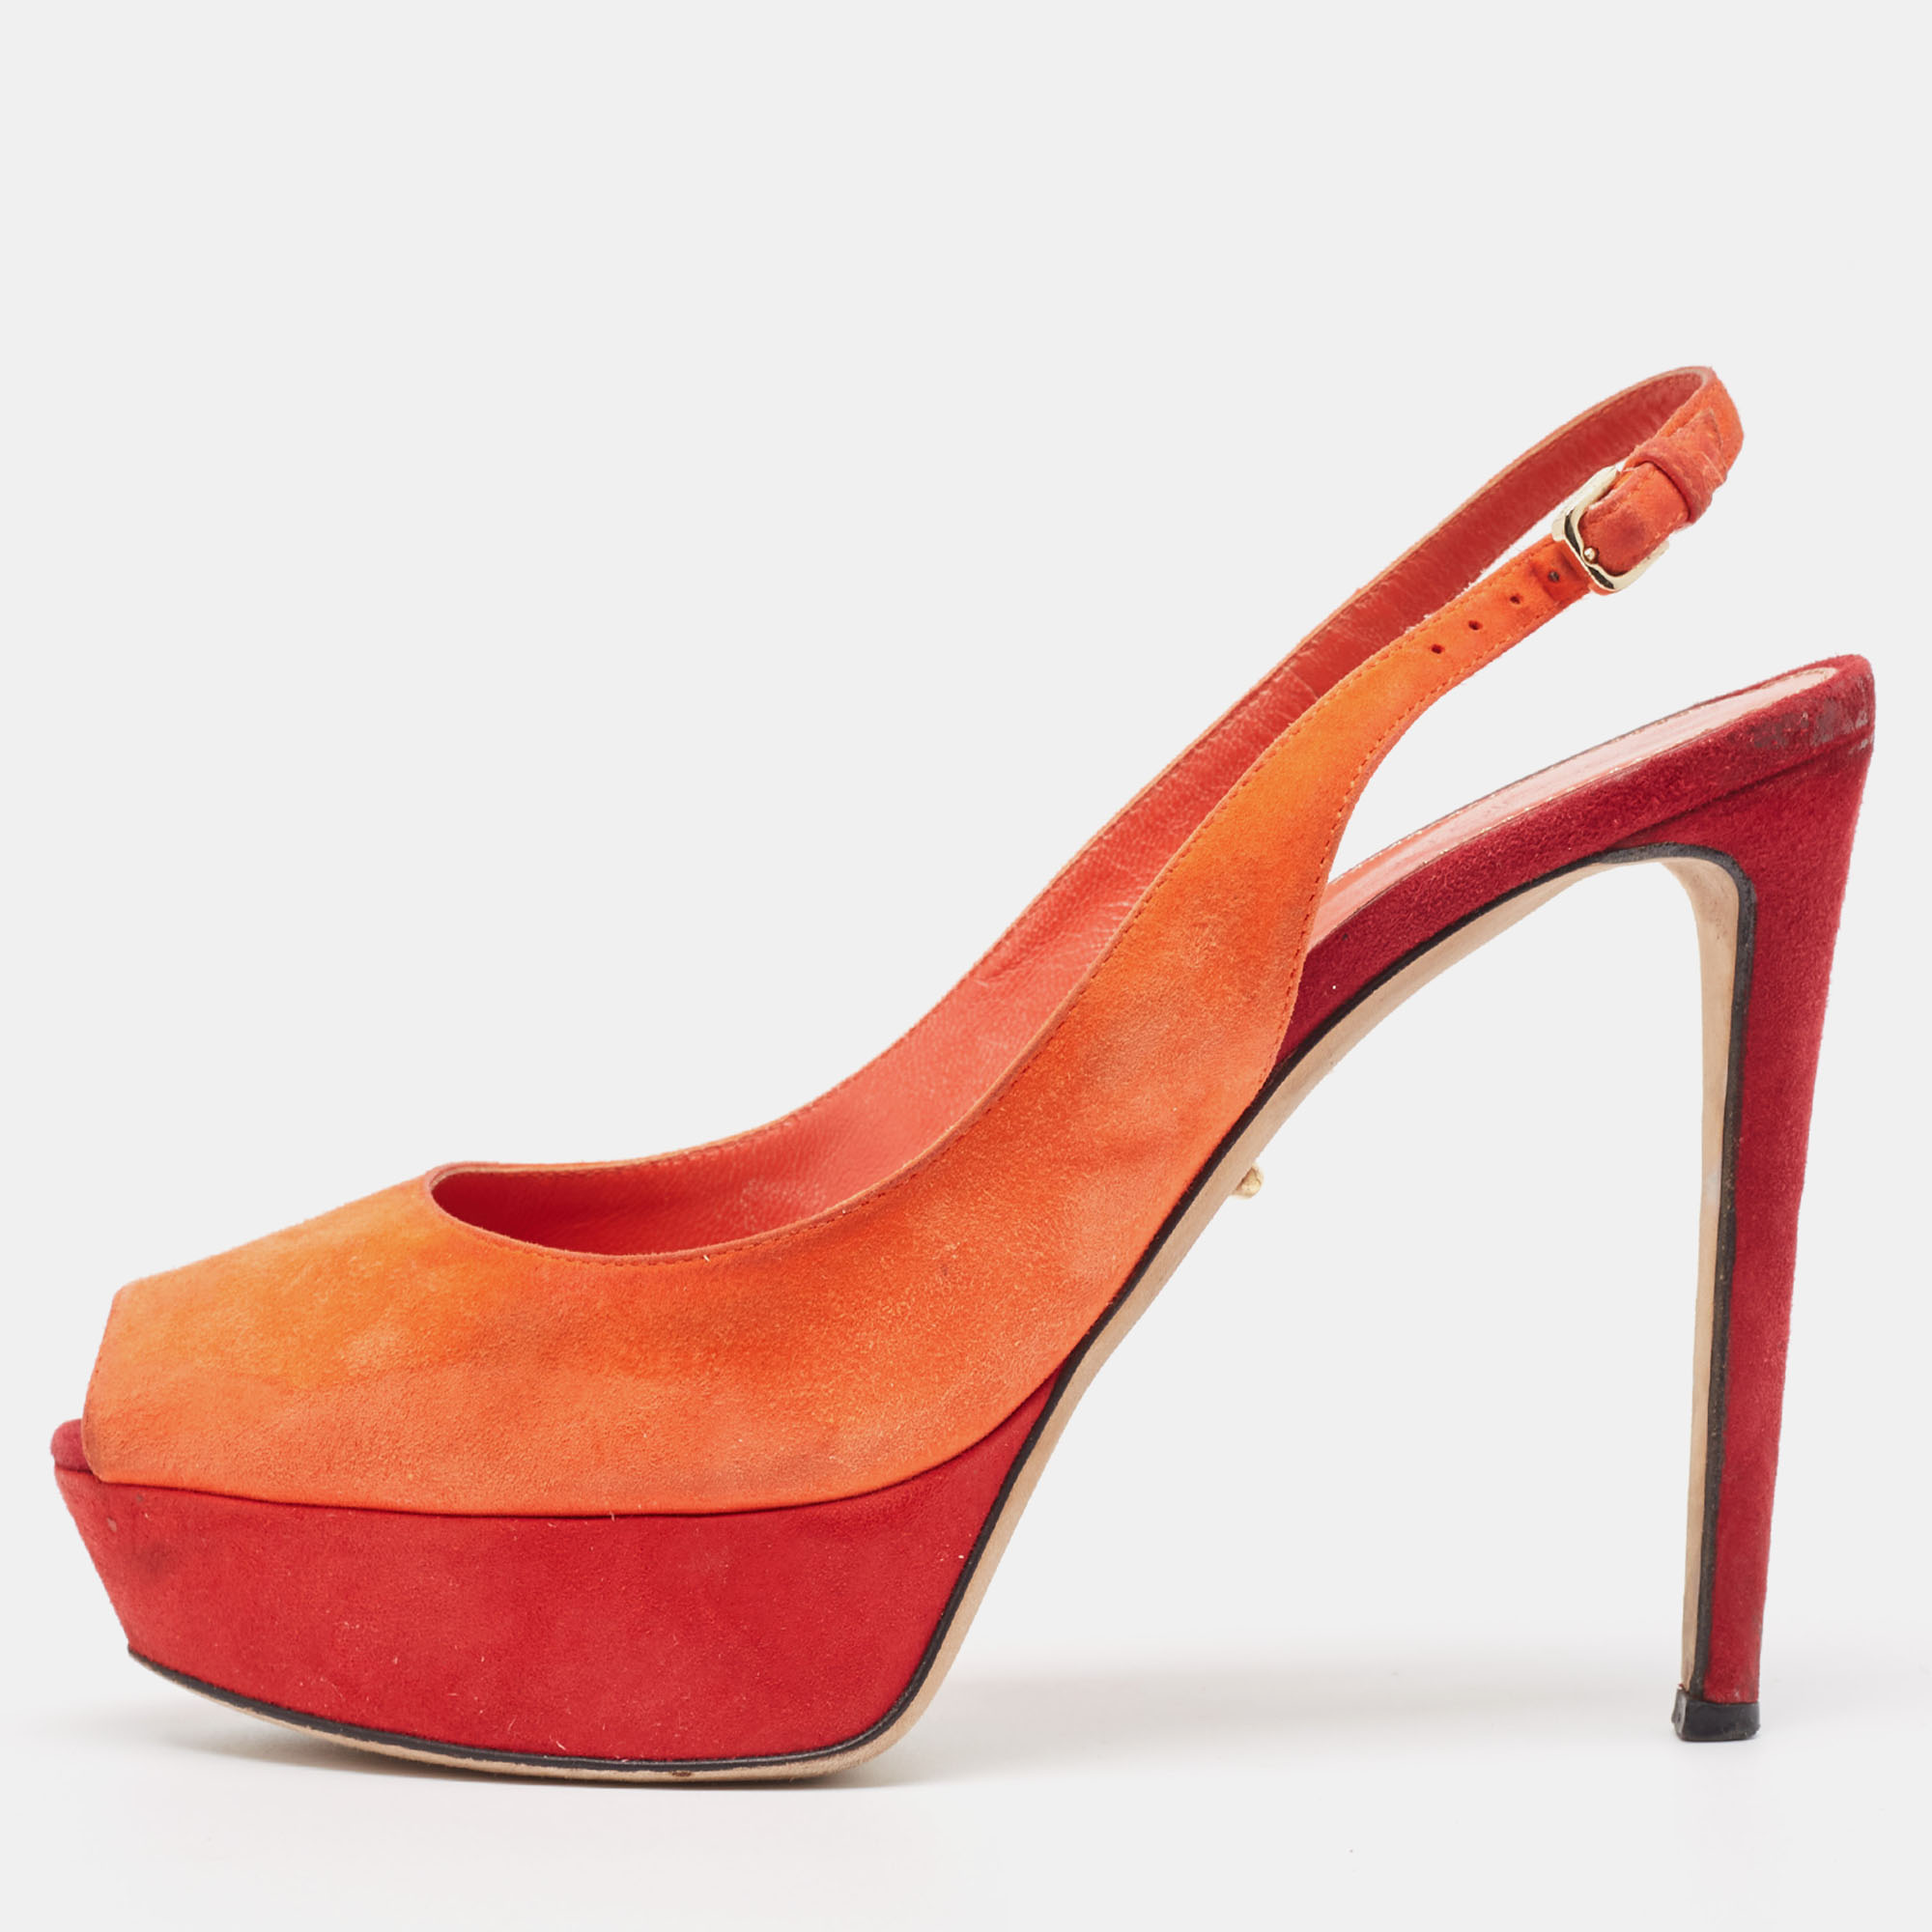 Sergio rossi orange suede peep toe slingback pumps size 37.5